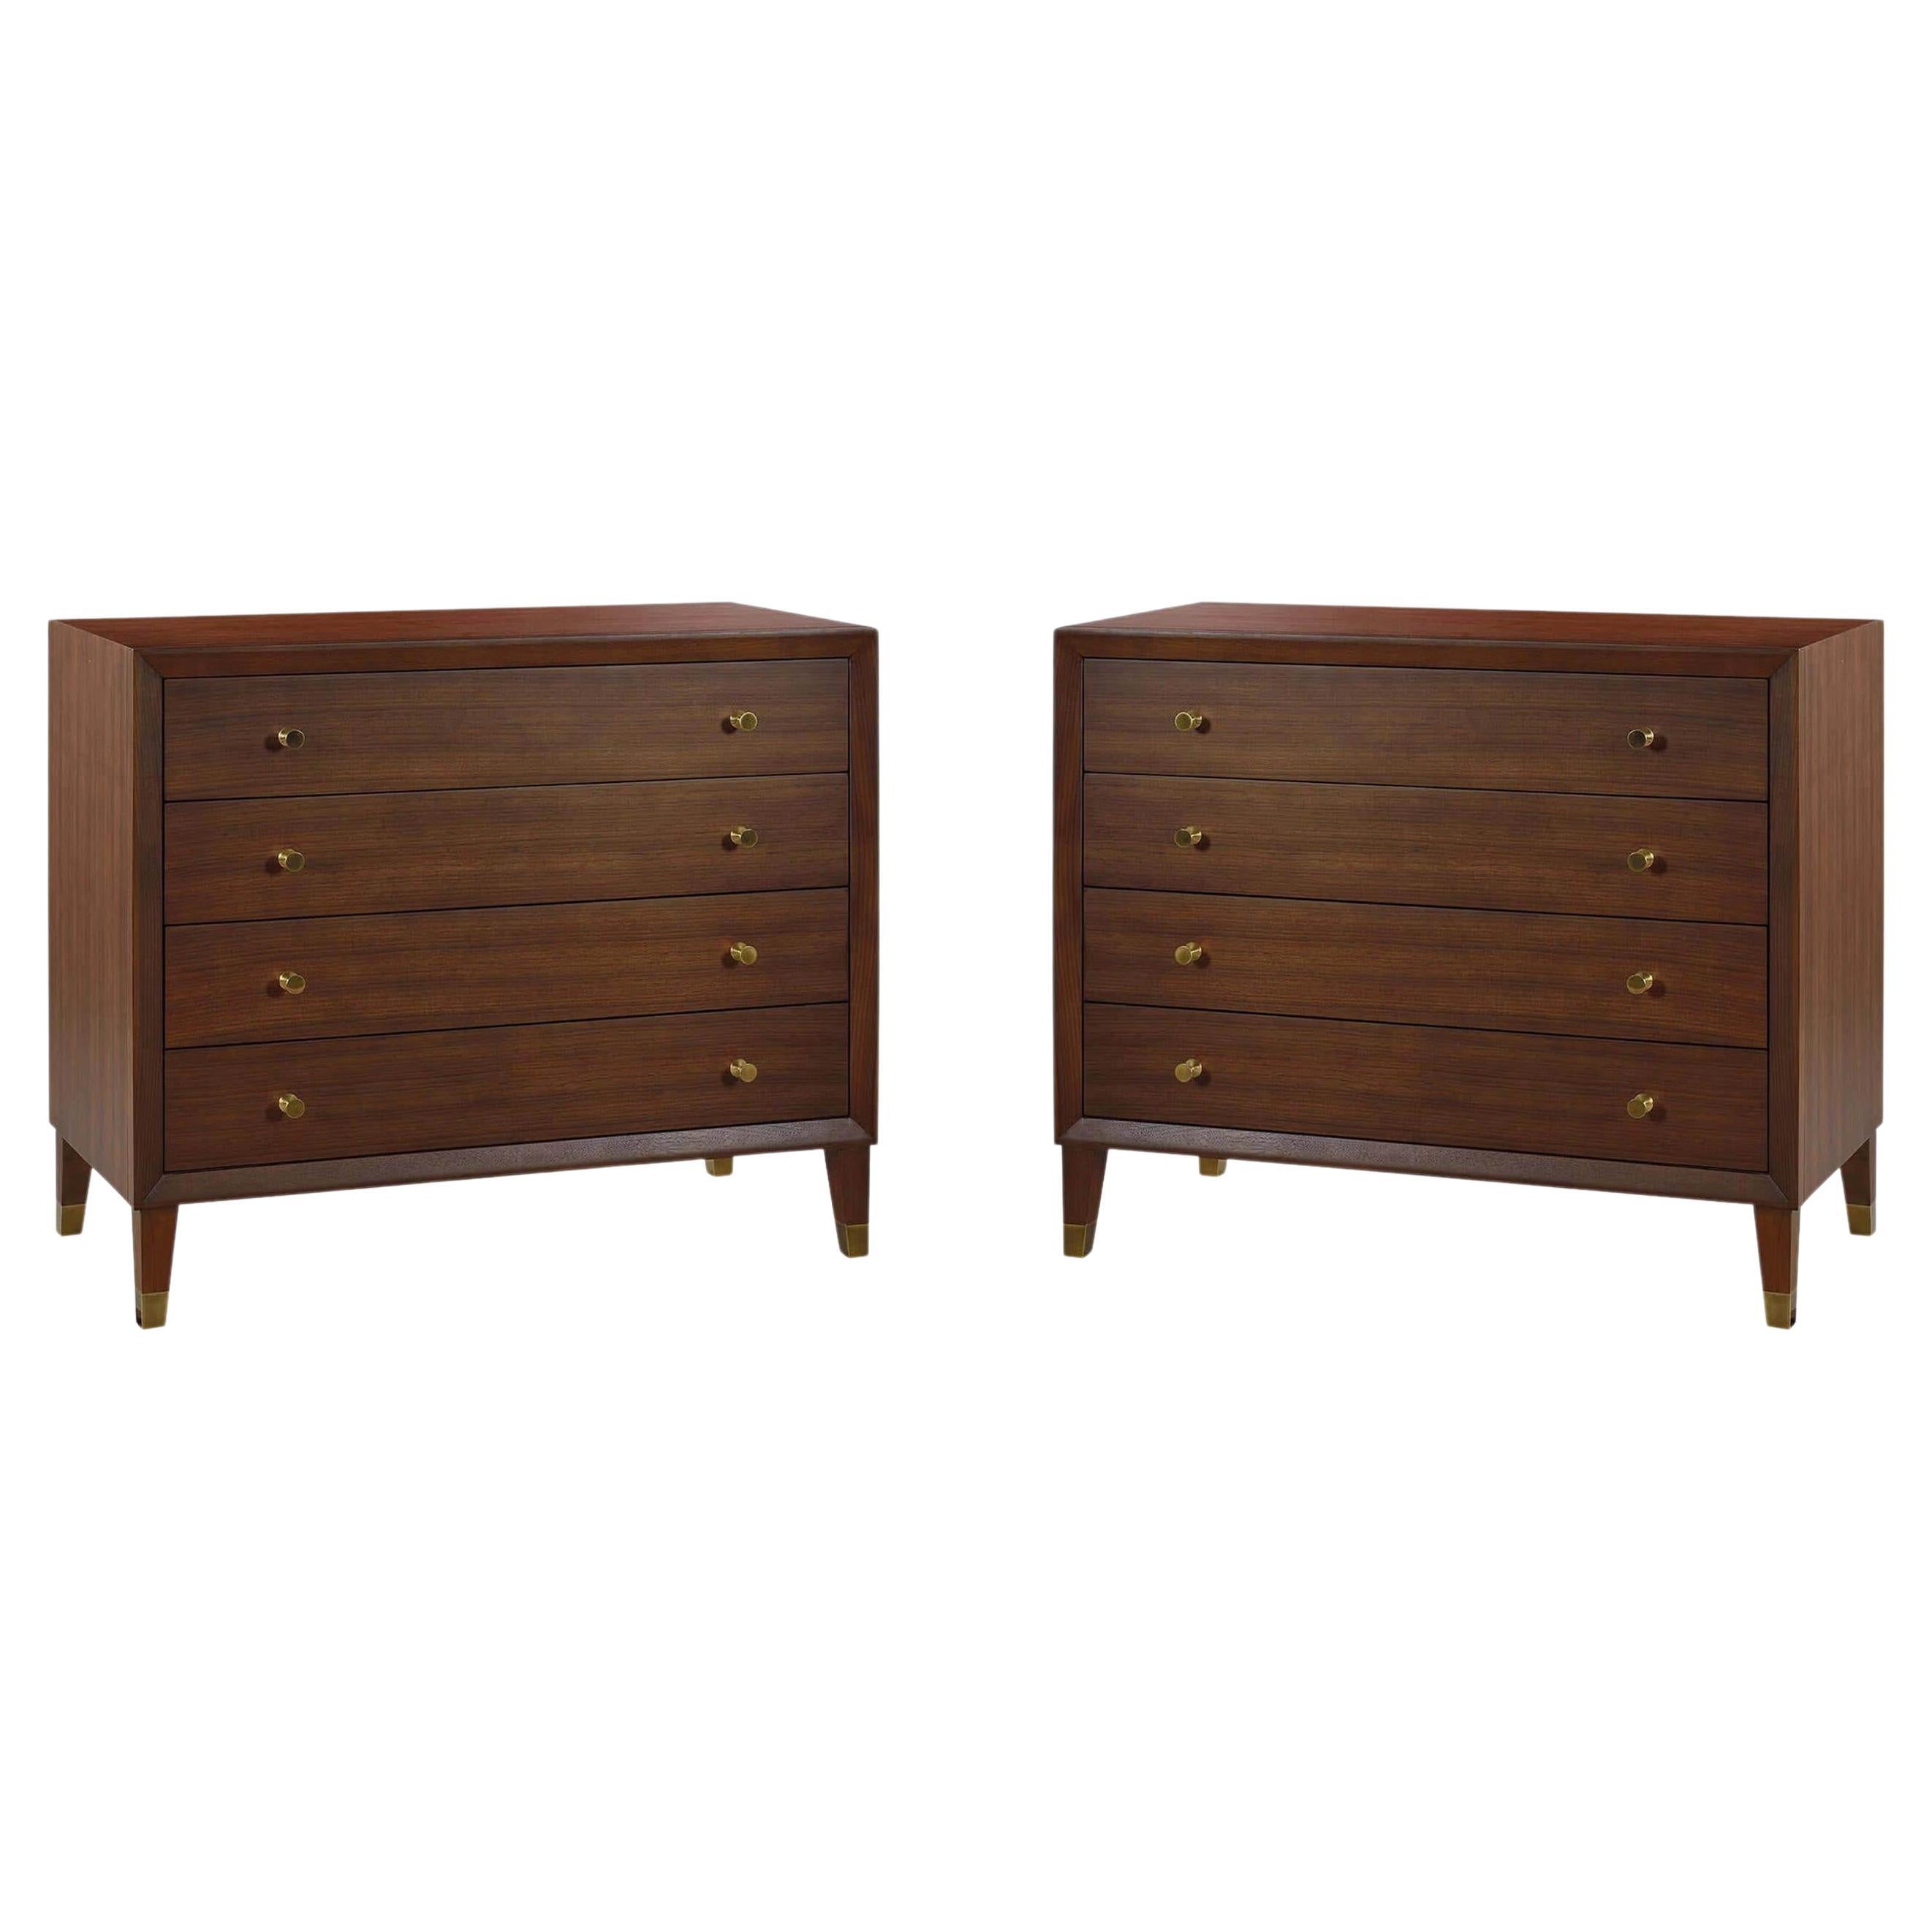 Pair of Midcentury Style Walnut Dressers